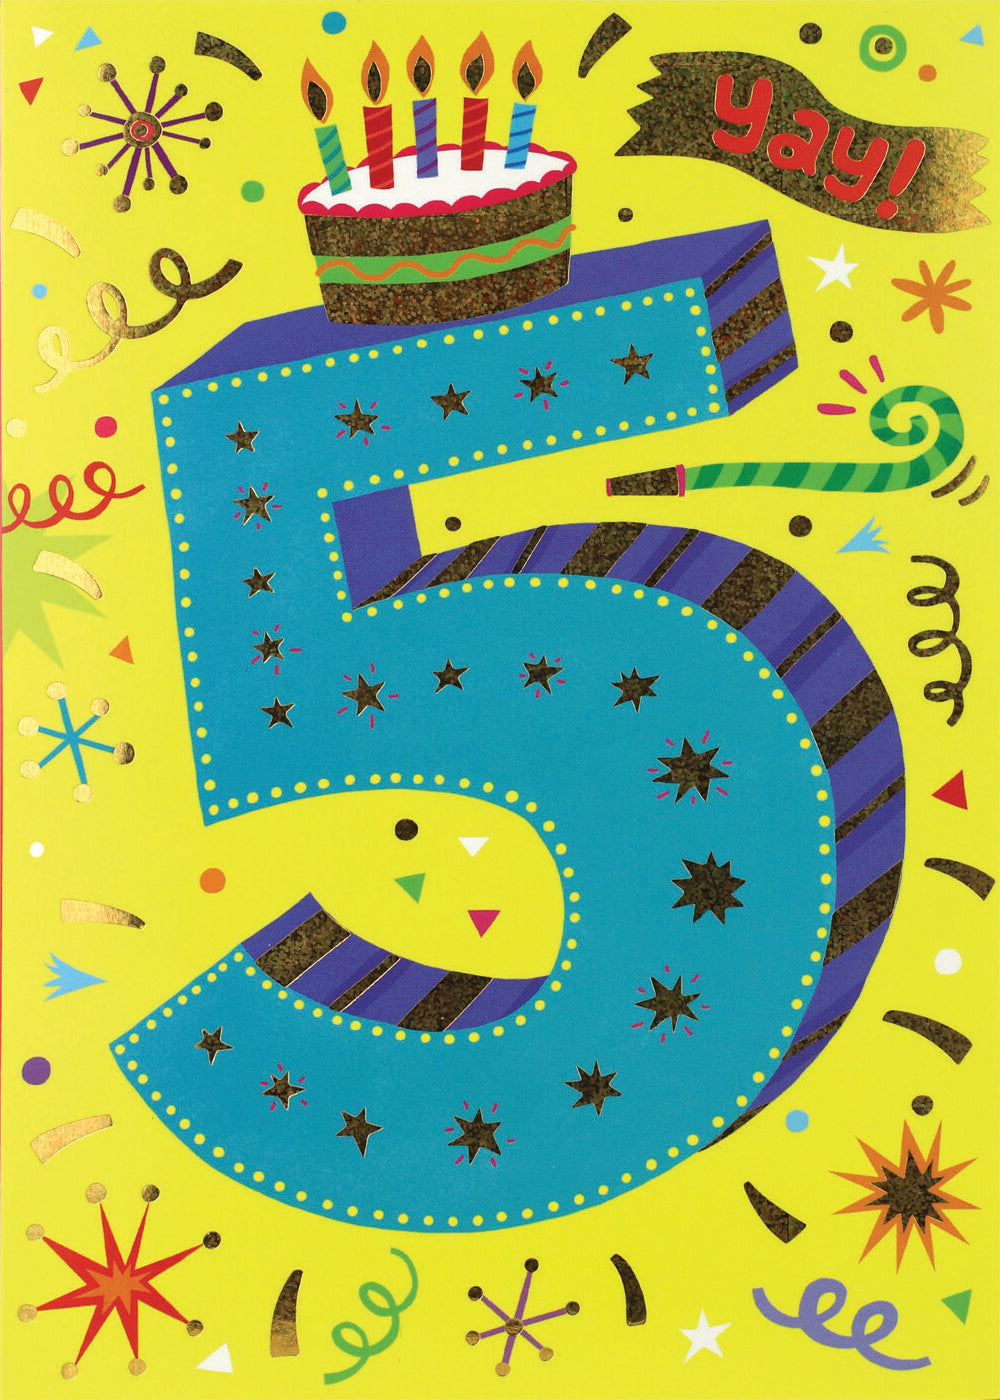 Age 5 Foil Birthday Card